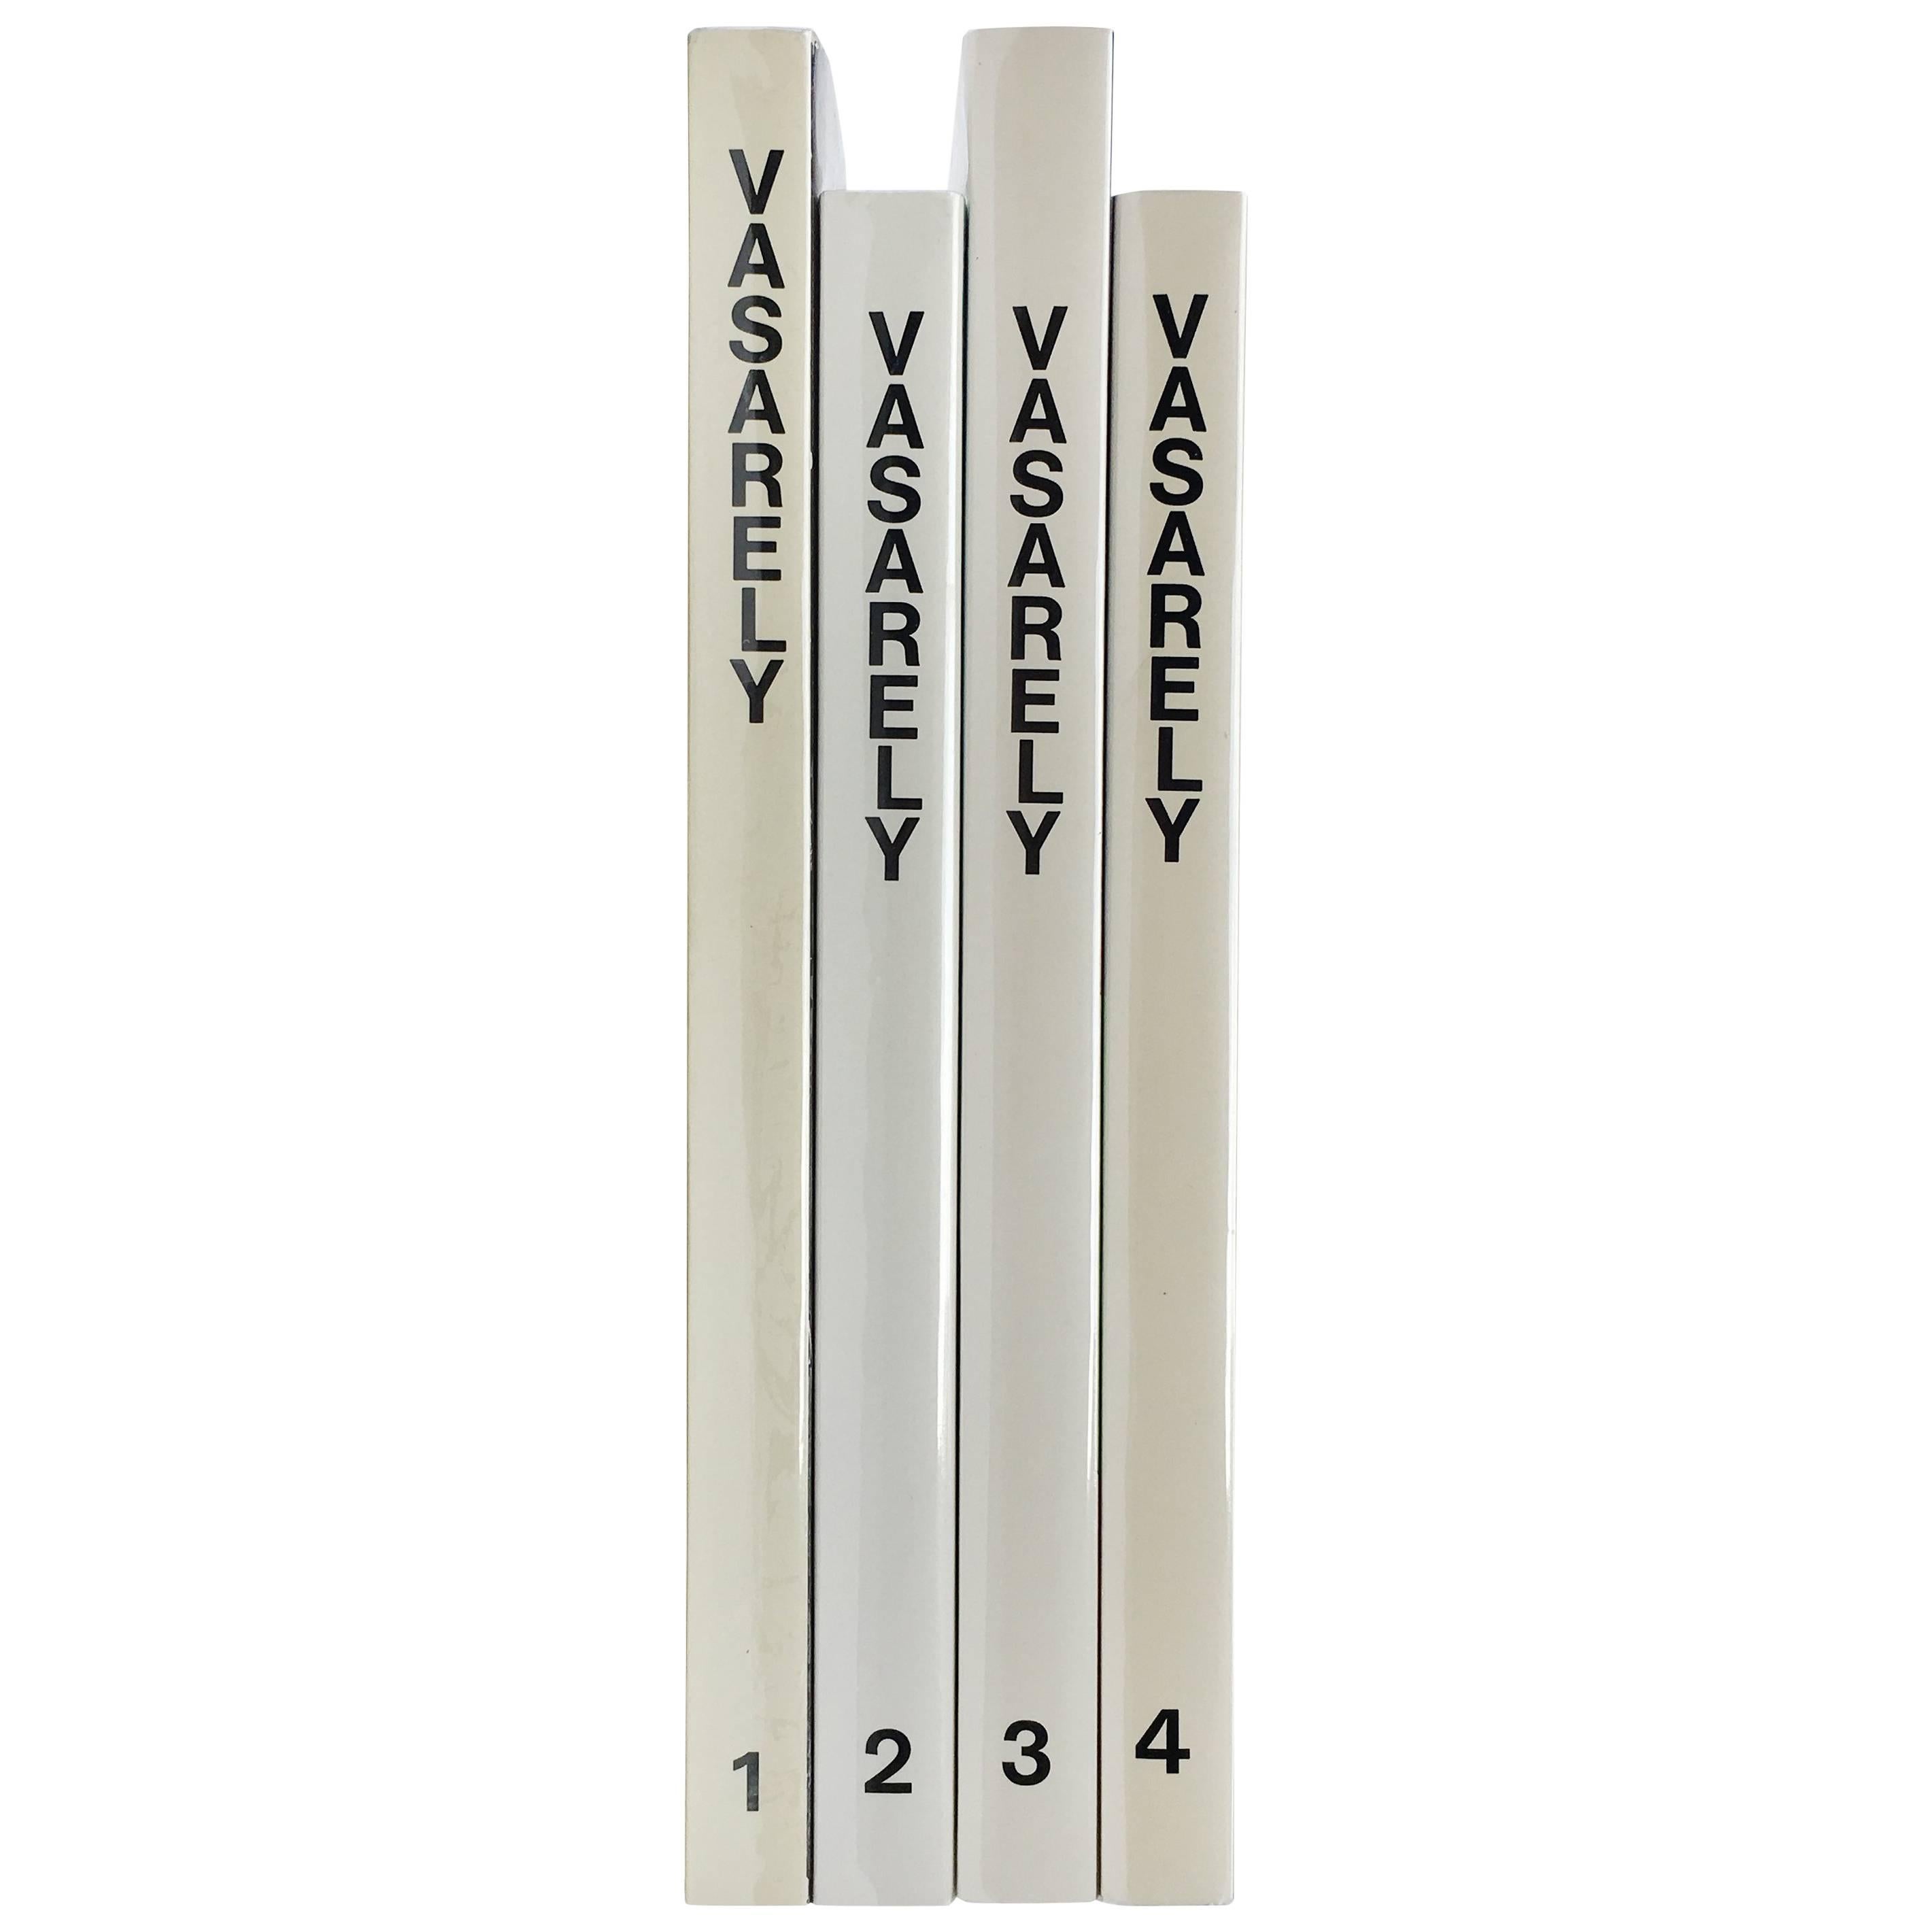 Vasarely Volumes I, II, III, IV, Victor Vasarely, 1973-1979